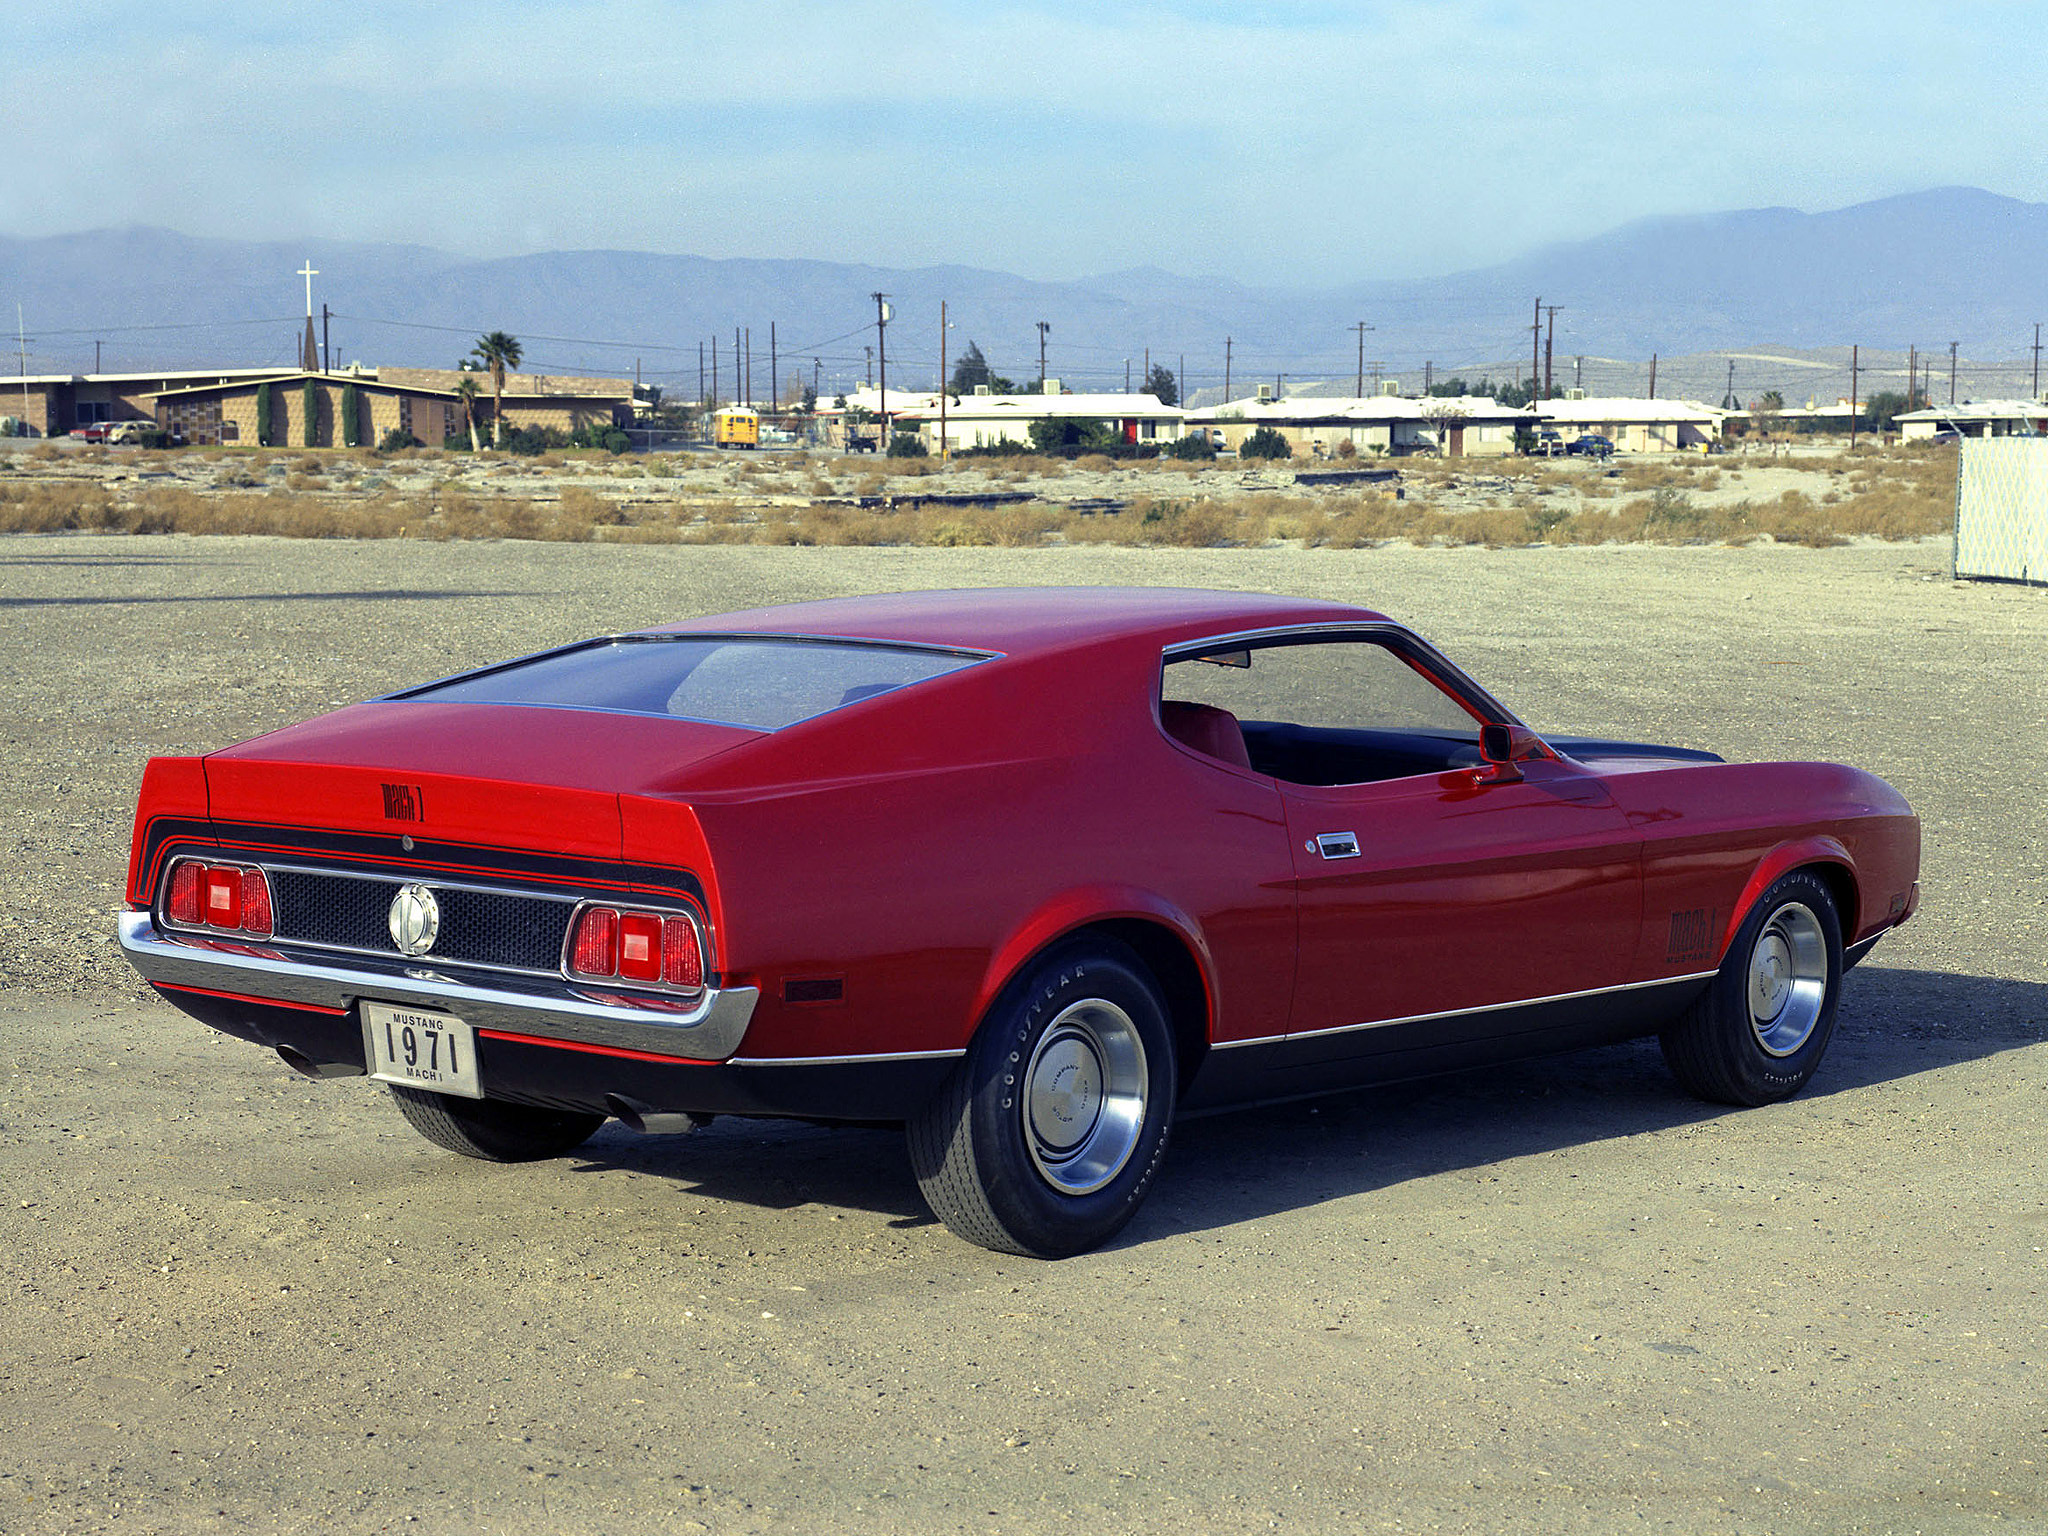 1971 Ford Mustang Mach 1 Wallpapers | MustangSpecs.com